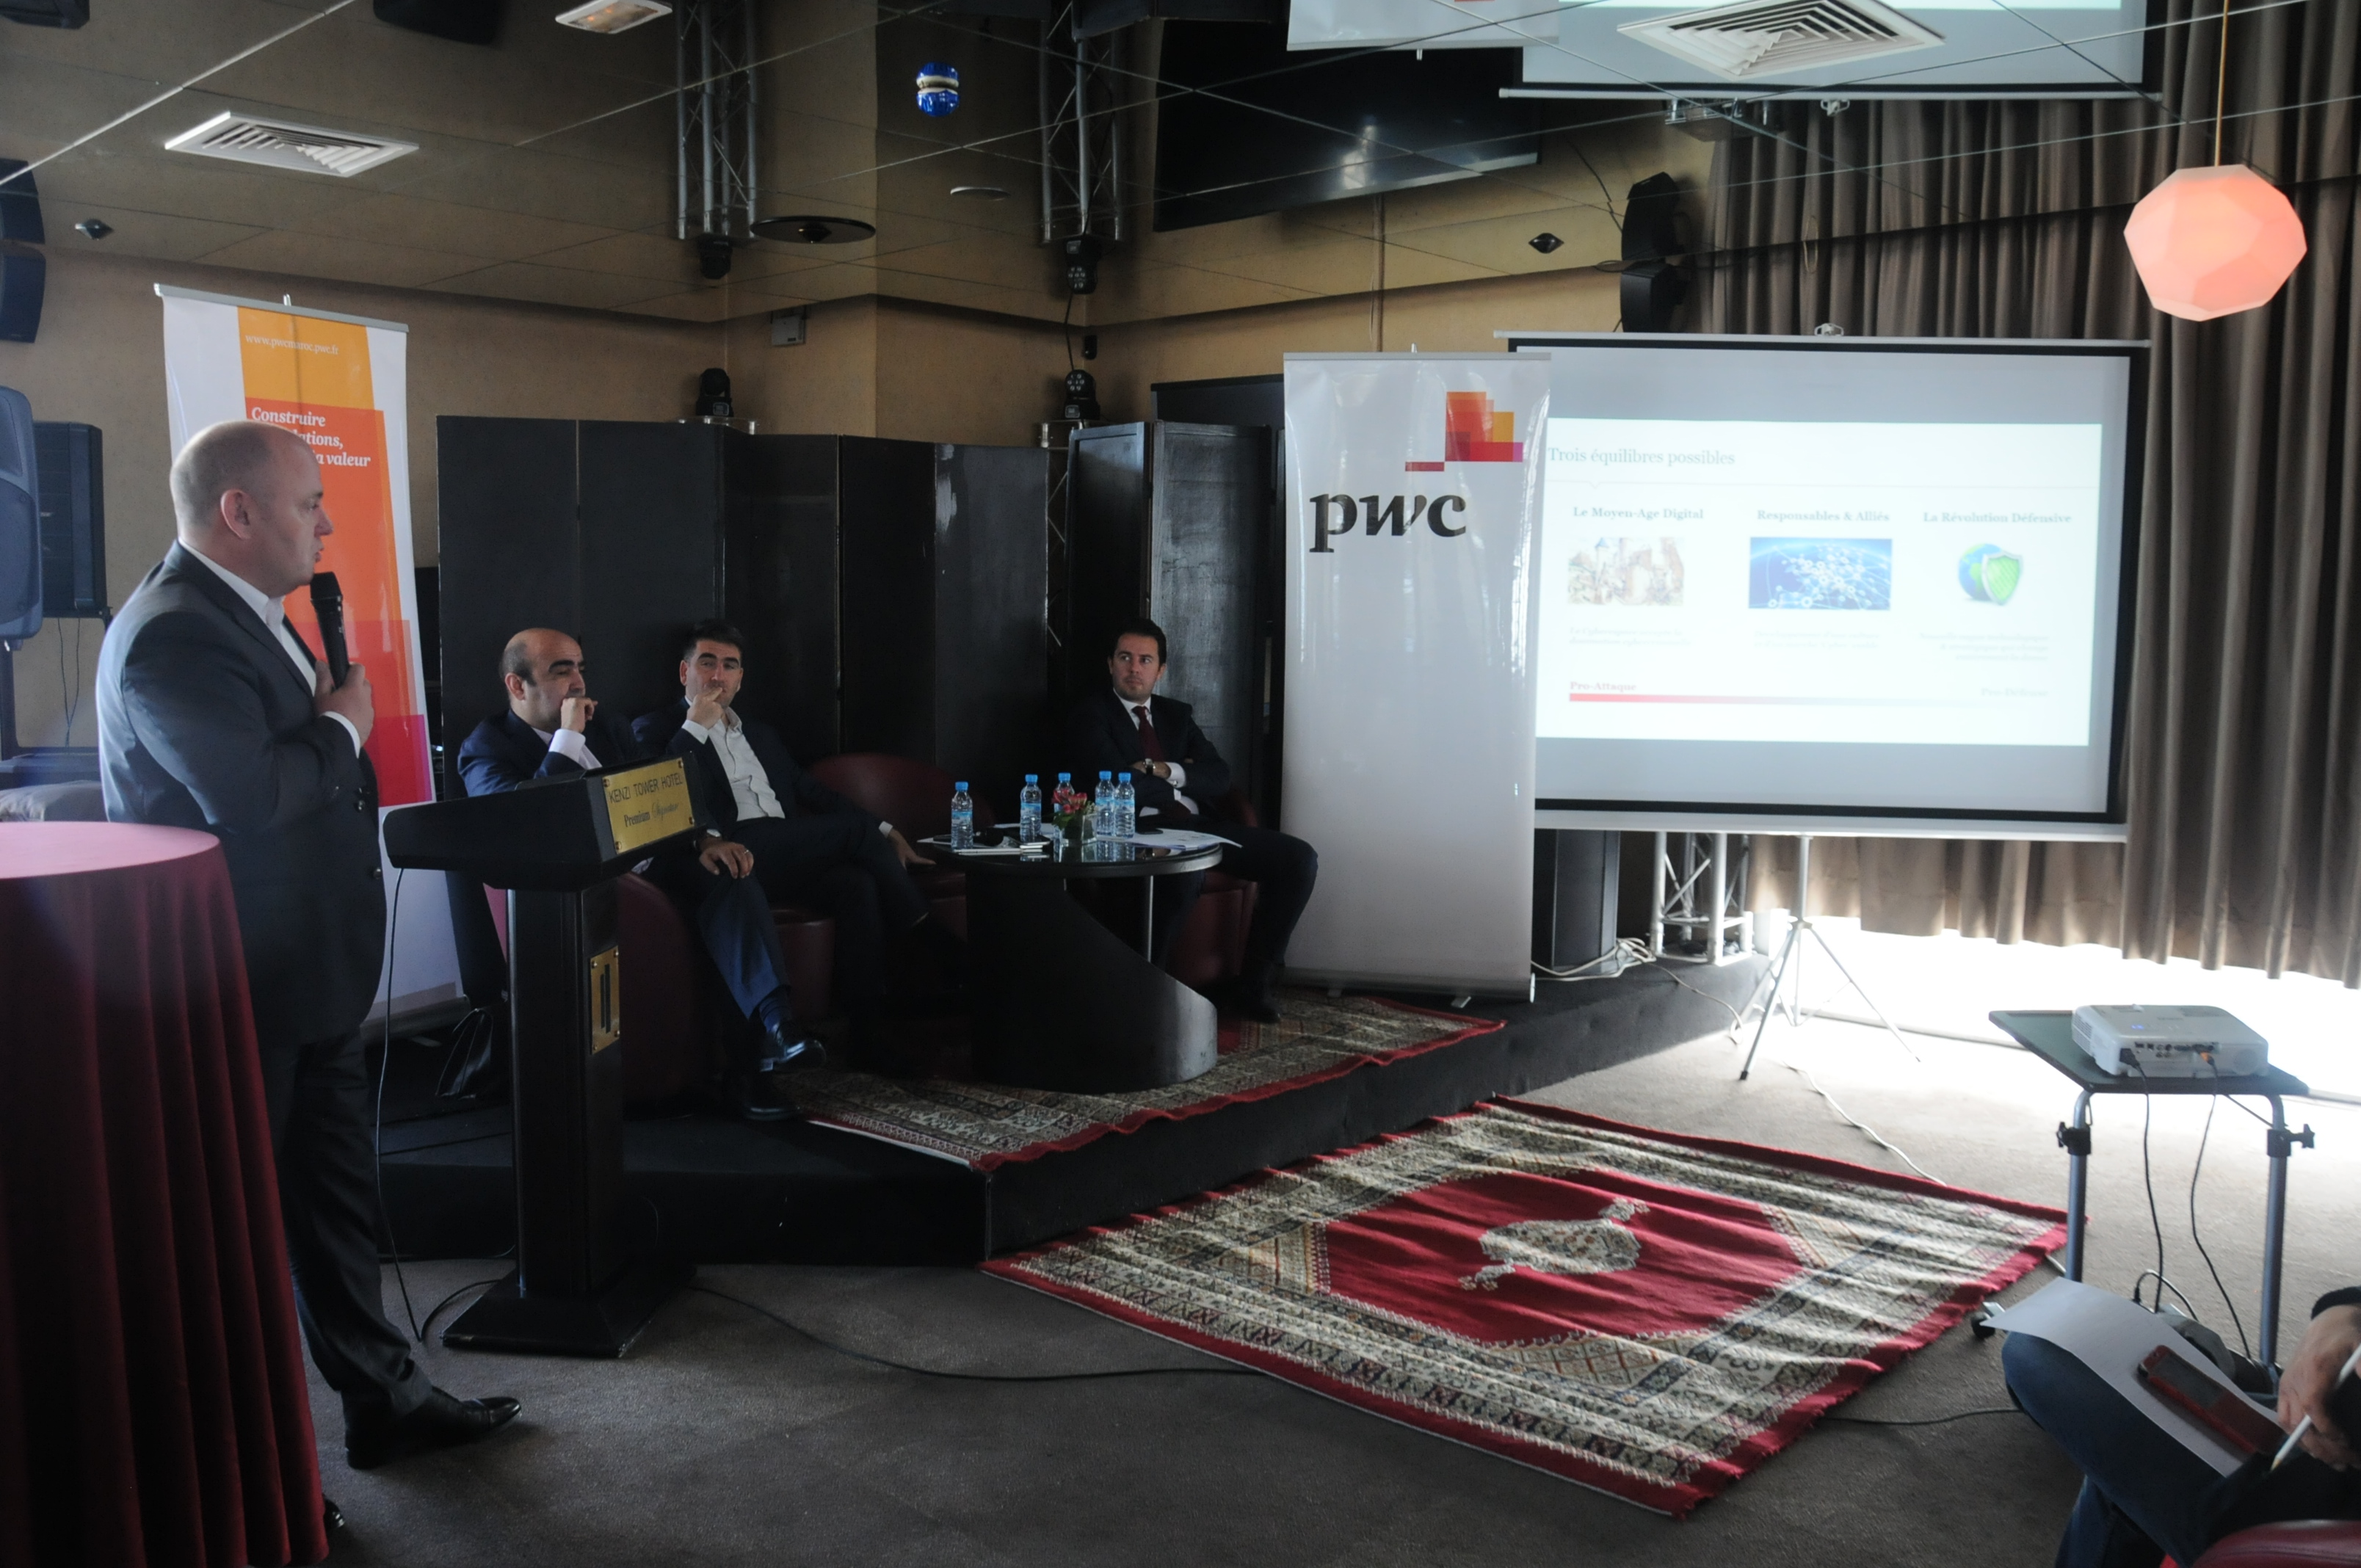 PwC lance son prochain "Experience Center" à Casablanca